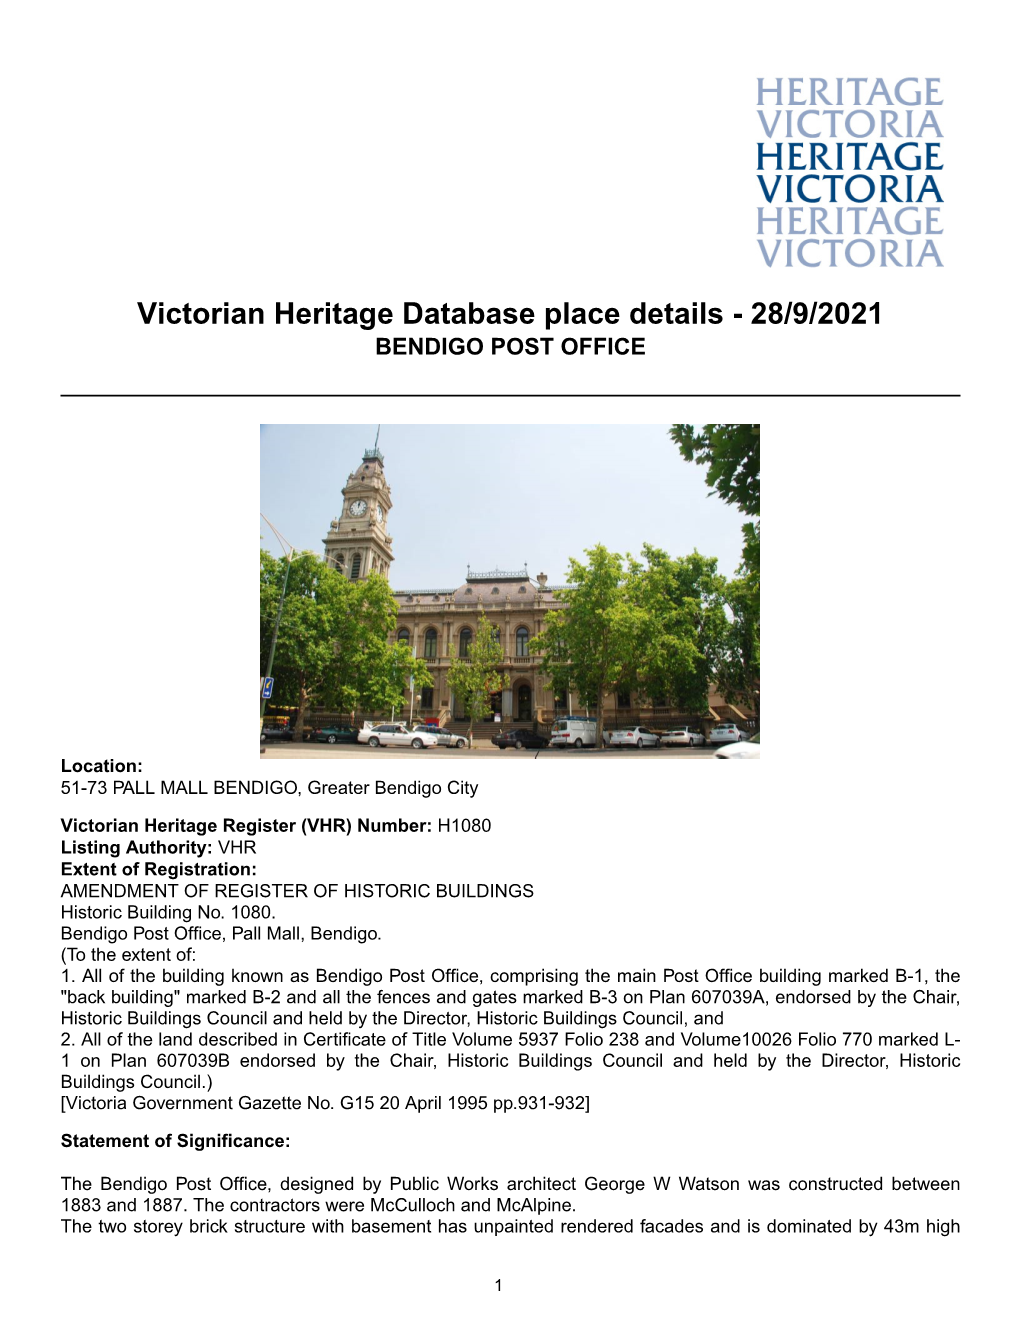 Victorian Heritage Database Place Details - 28/9/2021 BENDIGO POST OFFICE